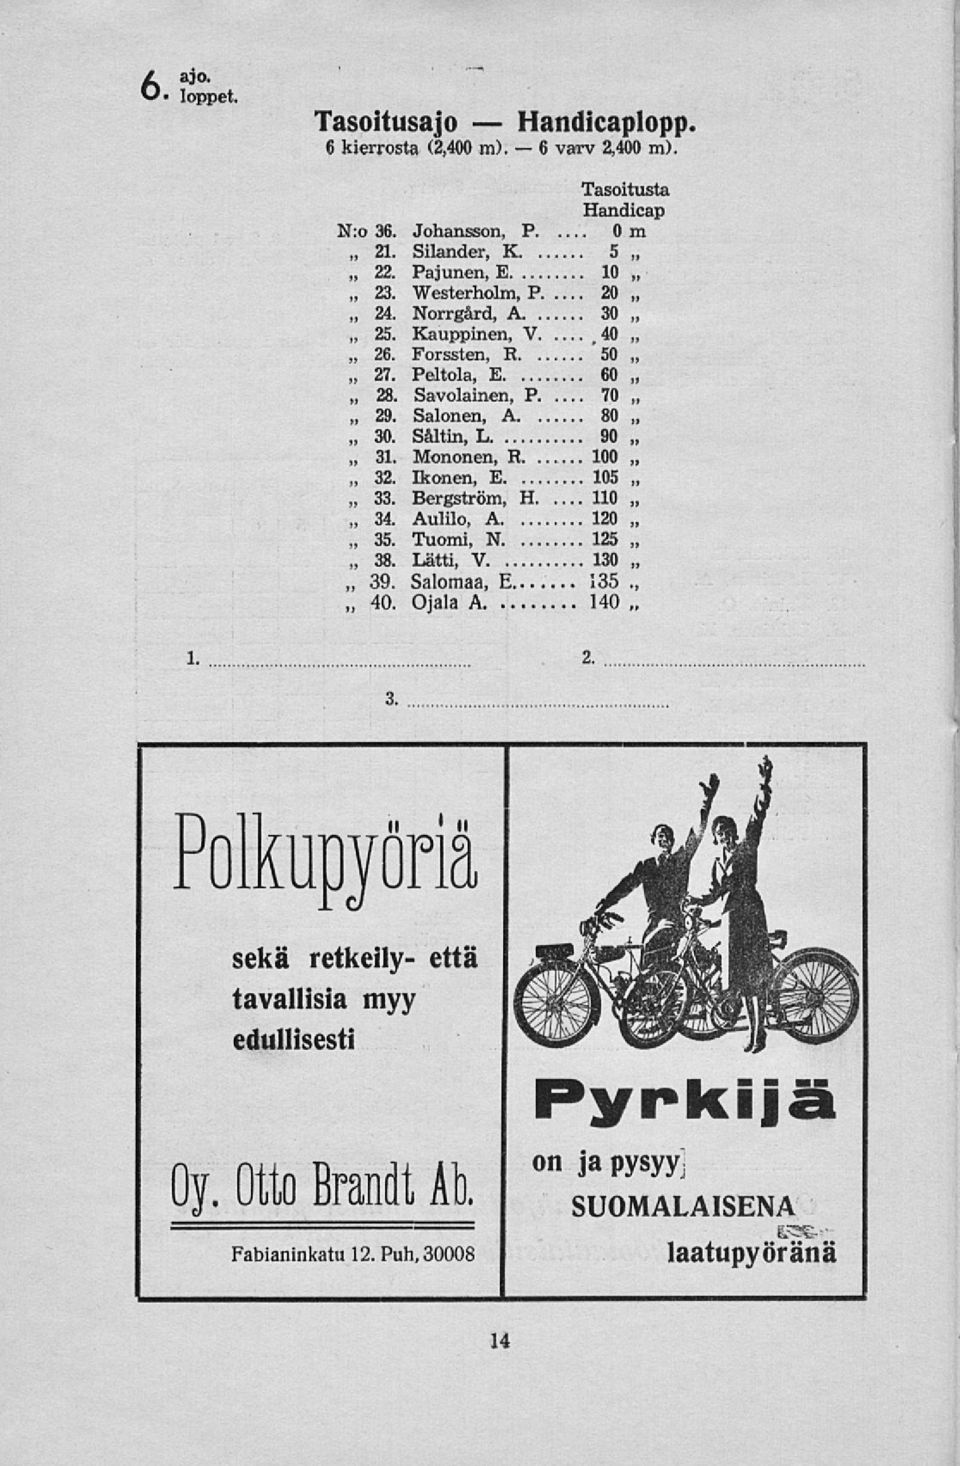 Peltola, E 60 Savolainen, P 70 Salonen, A 80 30. Saltin, L 90 31. Mononen, R 100 I? 40. Ikonen, E 105 Bergström, 110 H 34. Aulilo, A 120 35. Tuomi, N 125 38.